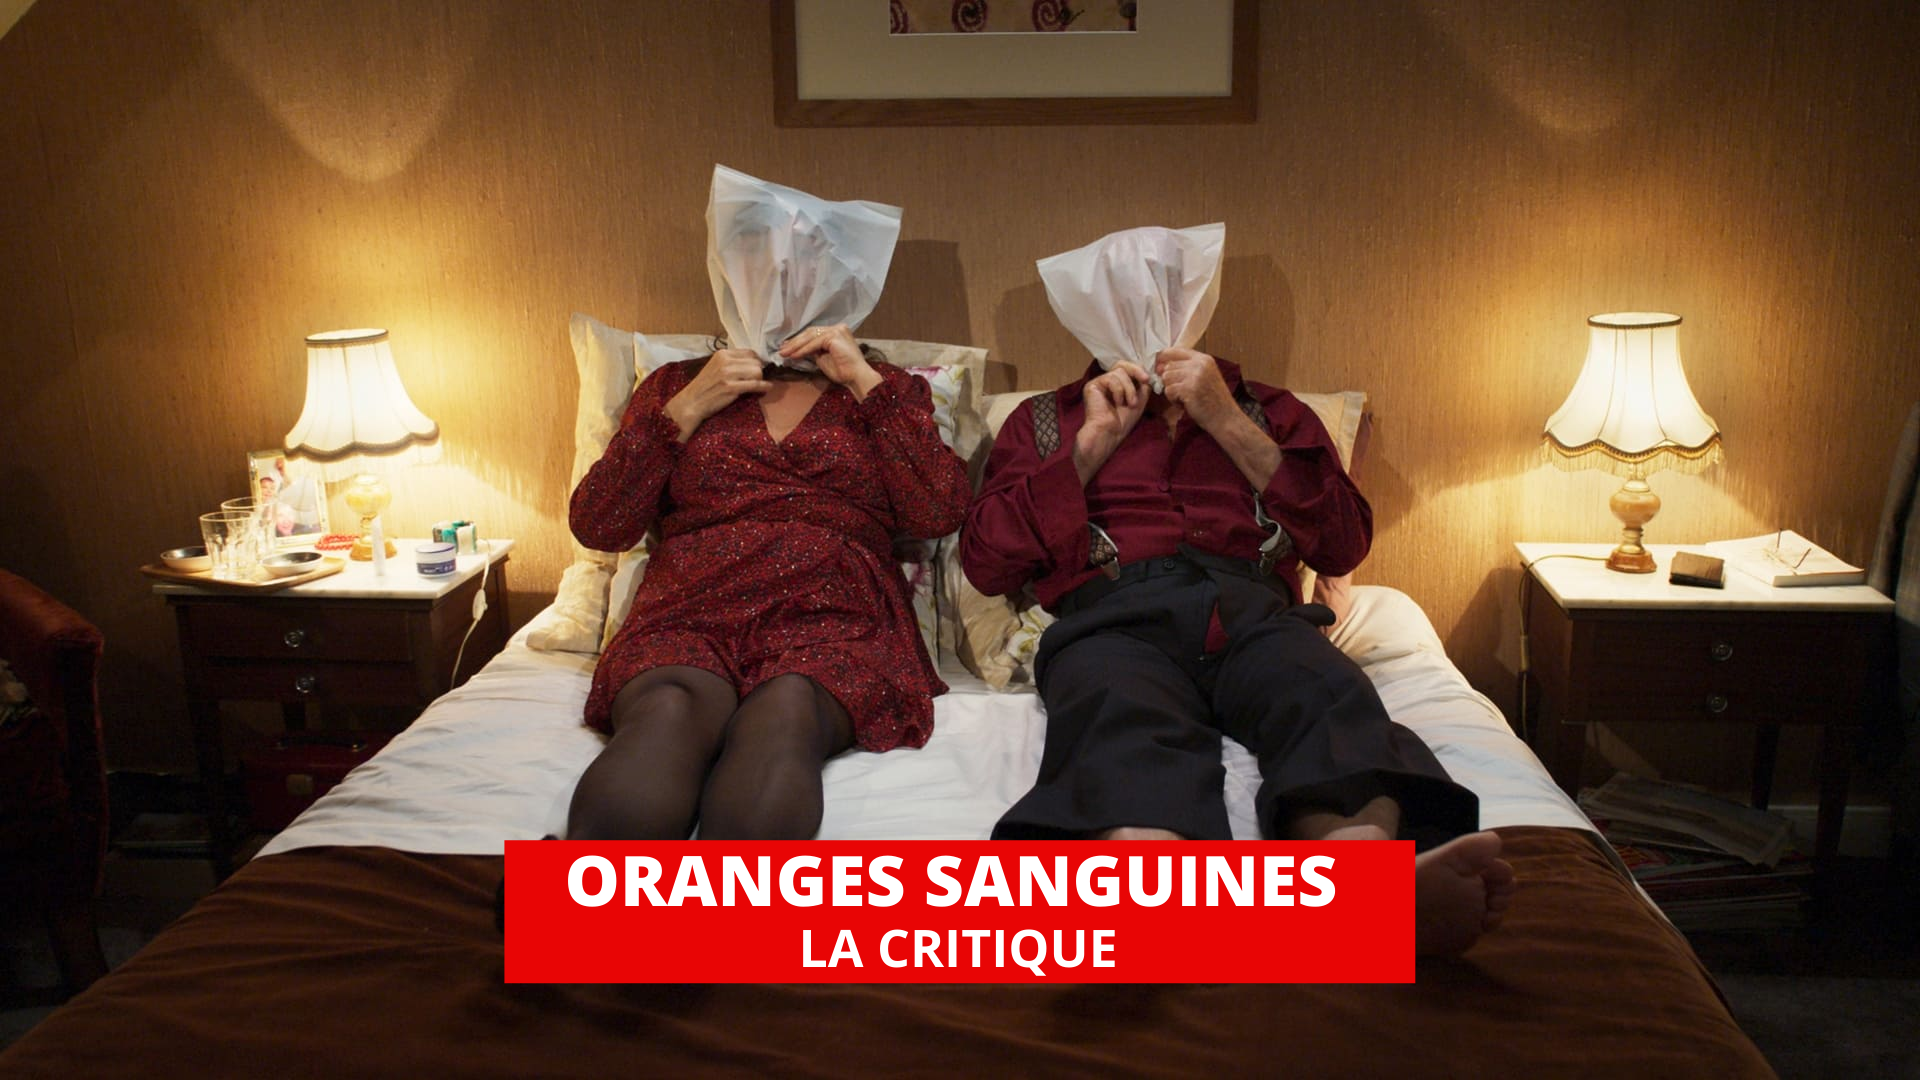 Oranges sanguines : monstruosités et grand cinéma